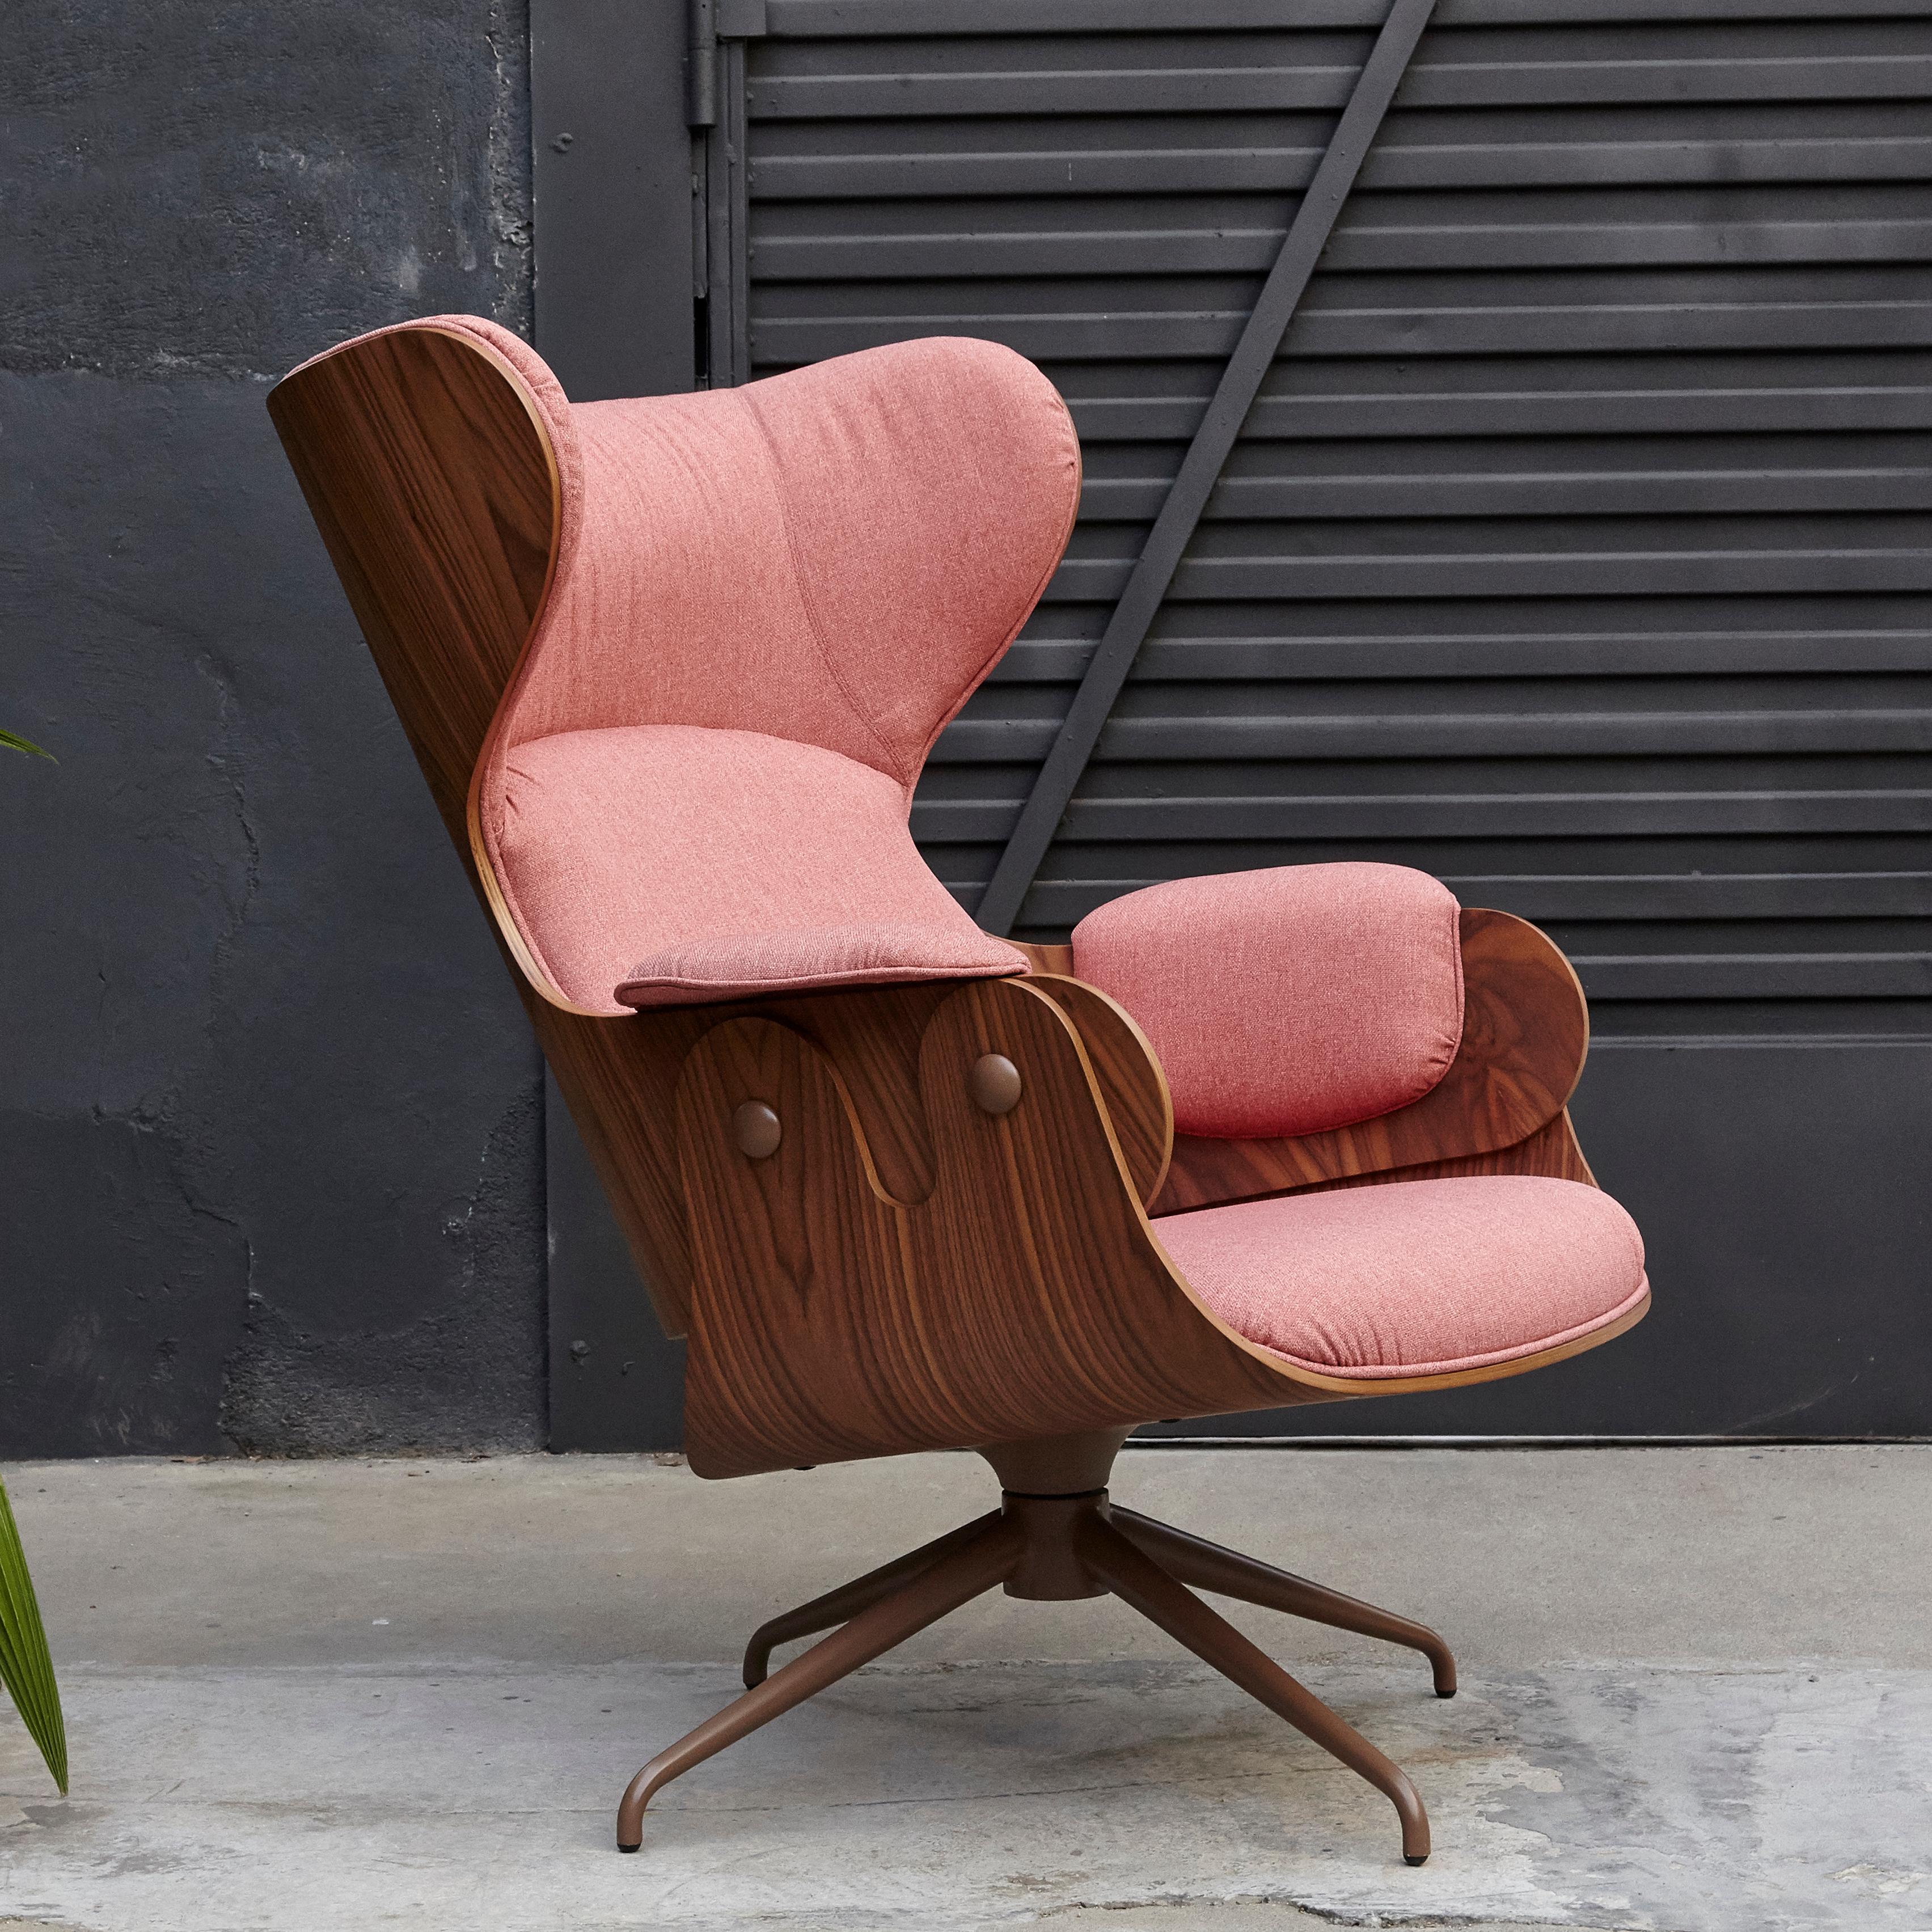 Spanish Jaime Hayon, Contemporary, Playwood Walnut Pink Upholstery Lounger Armchair